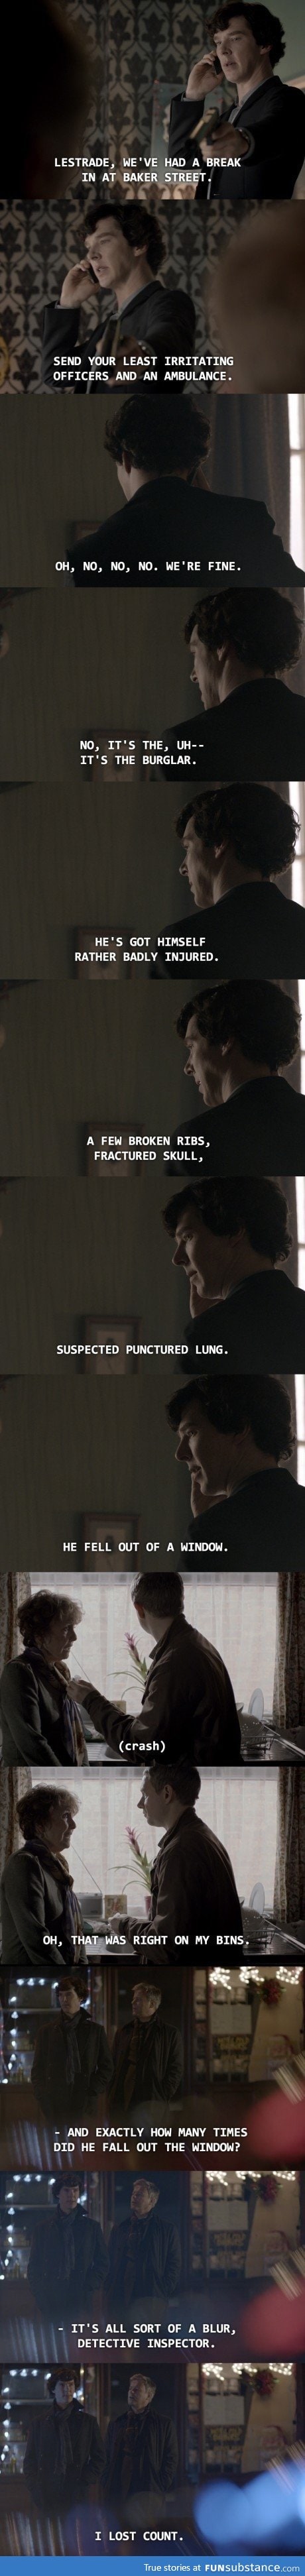 Possibly the best of Sherlock